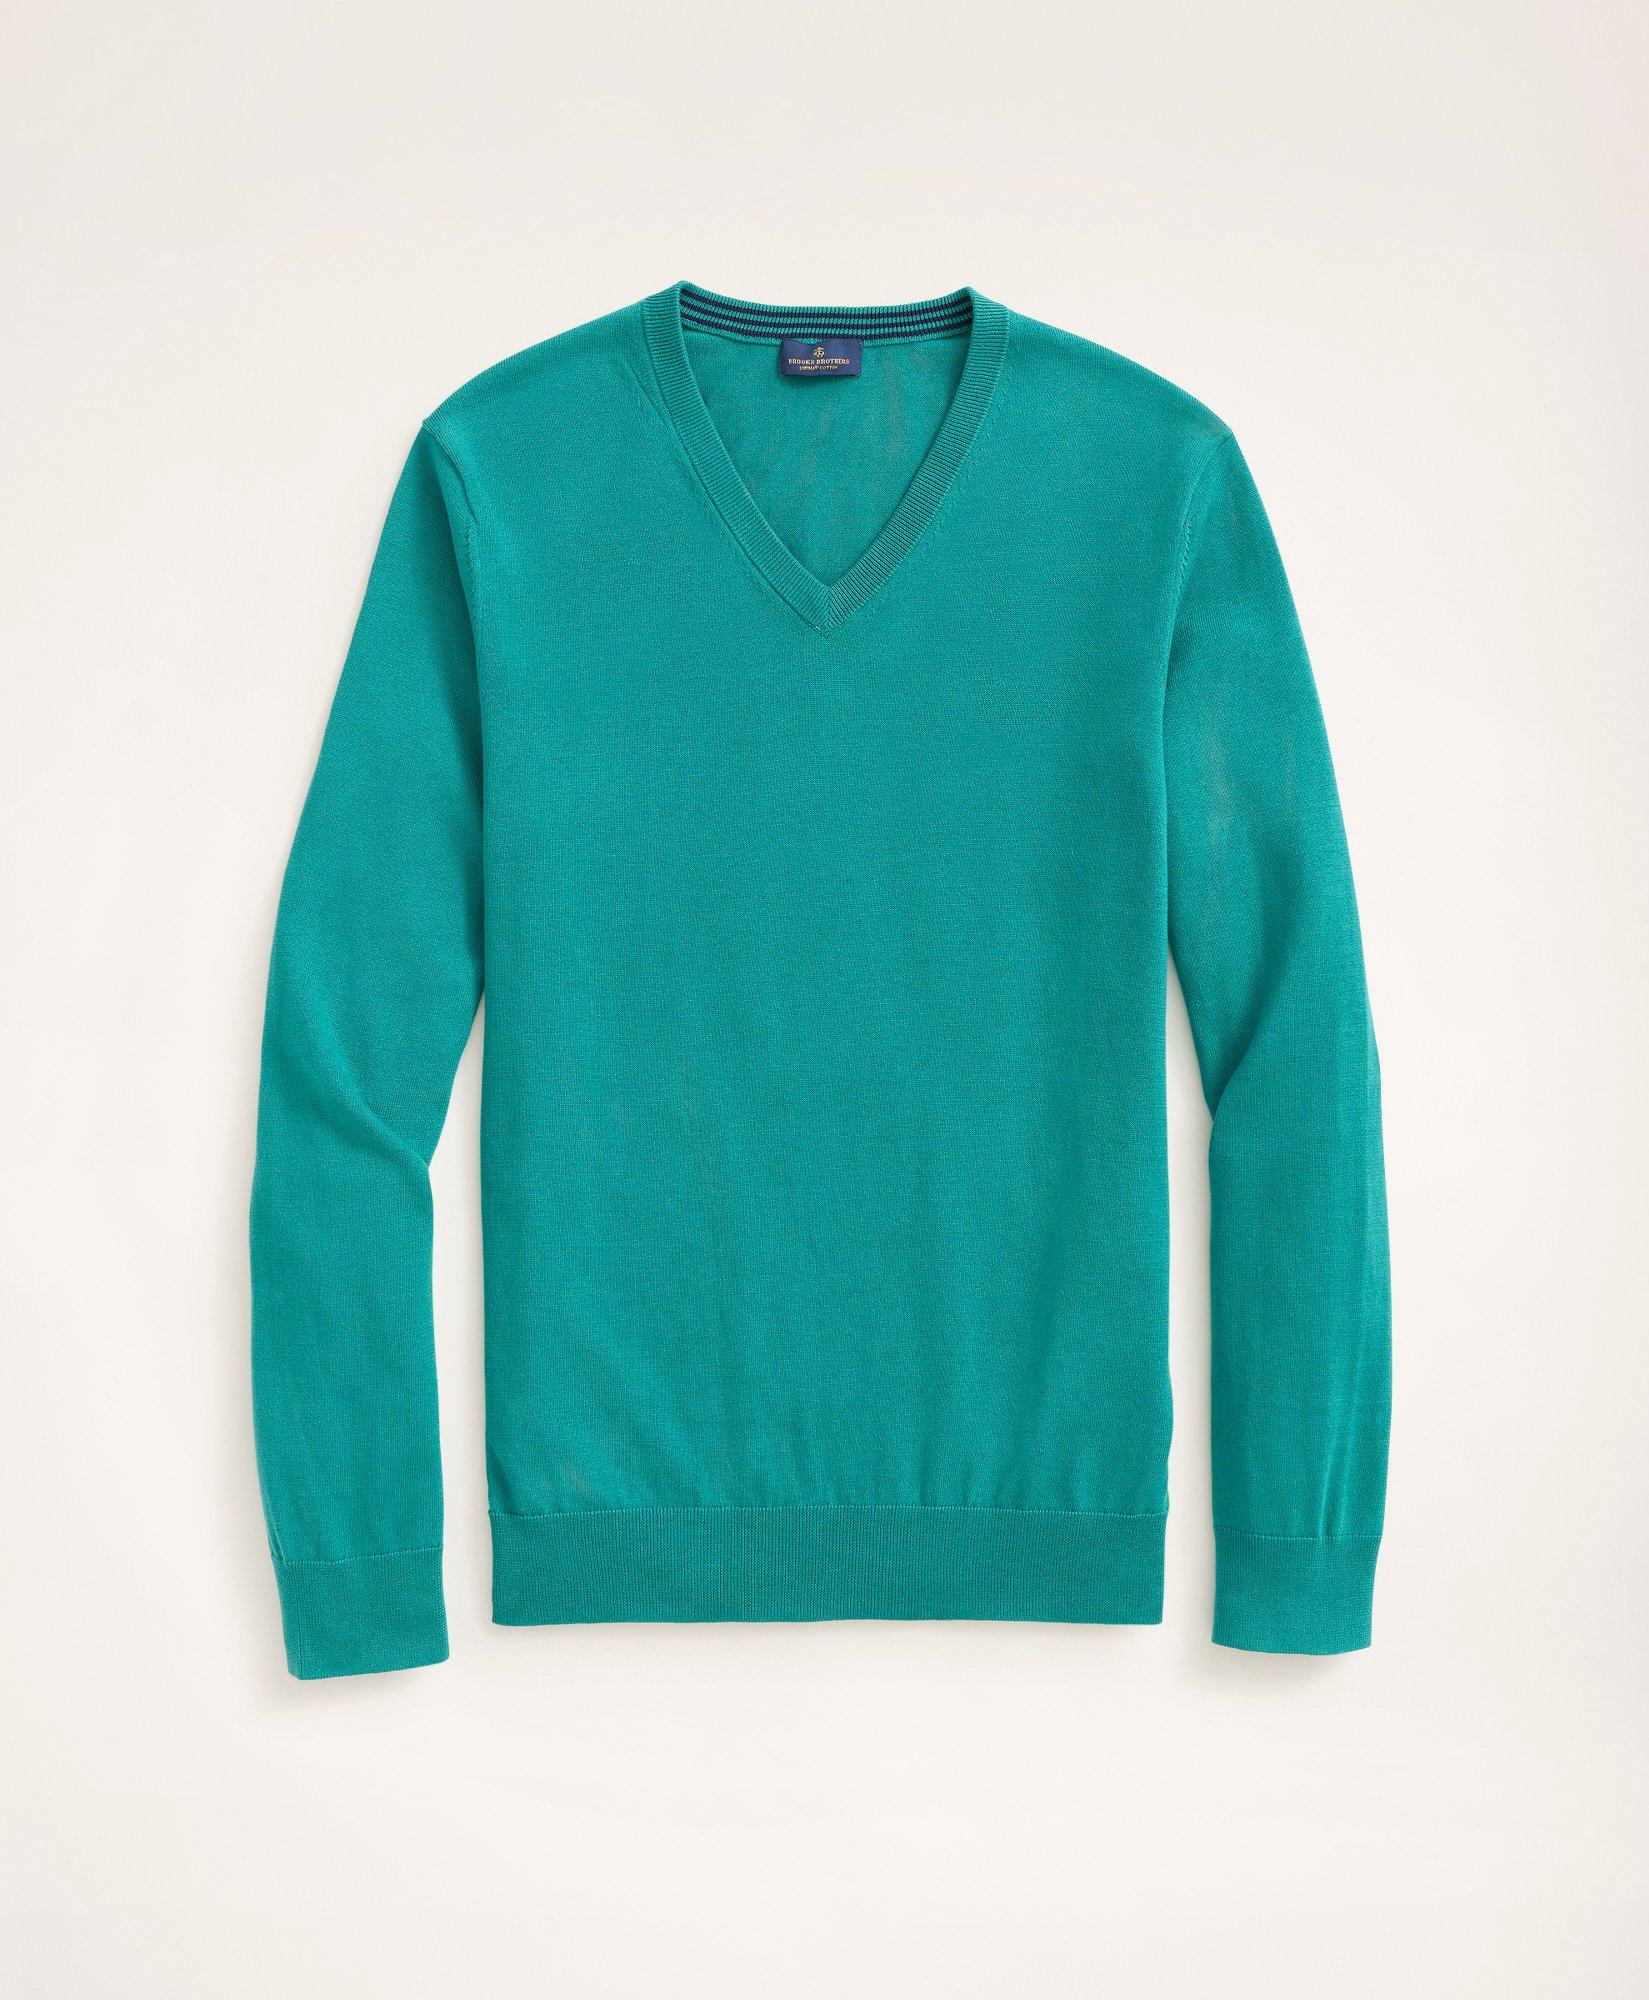 Brooks Brothers Big & Tall Supima Cotton V-neck Sweater | Teal | Size 4x Tall